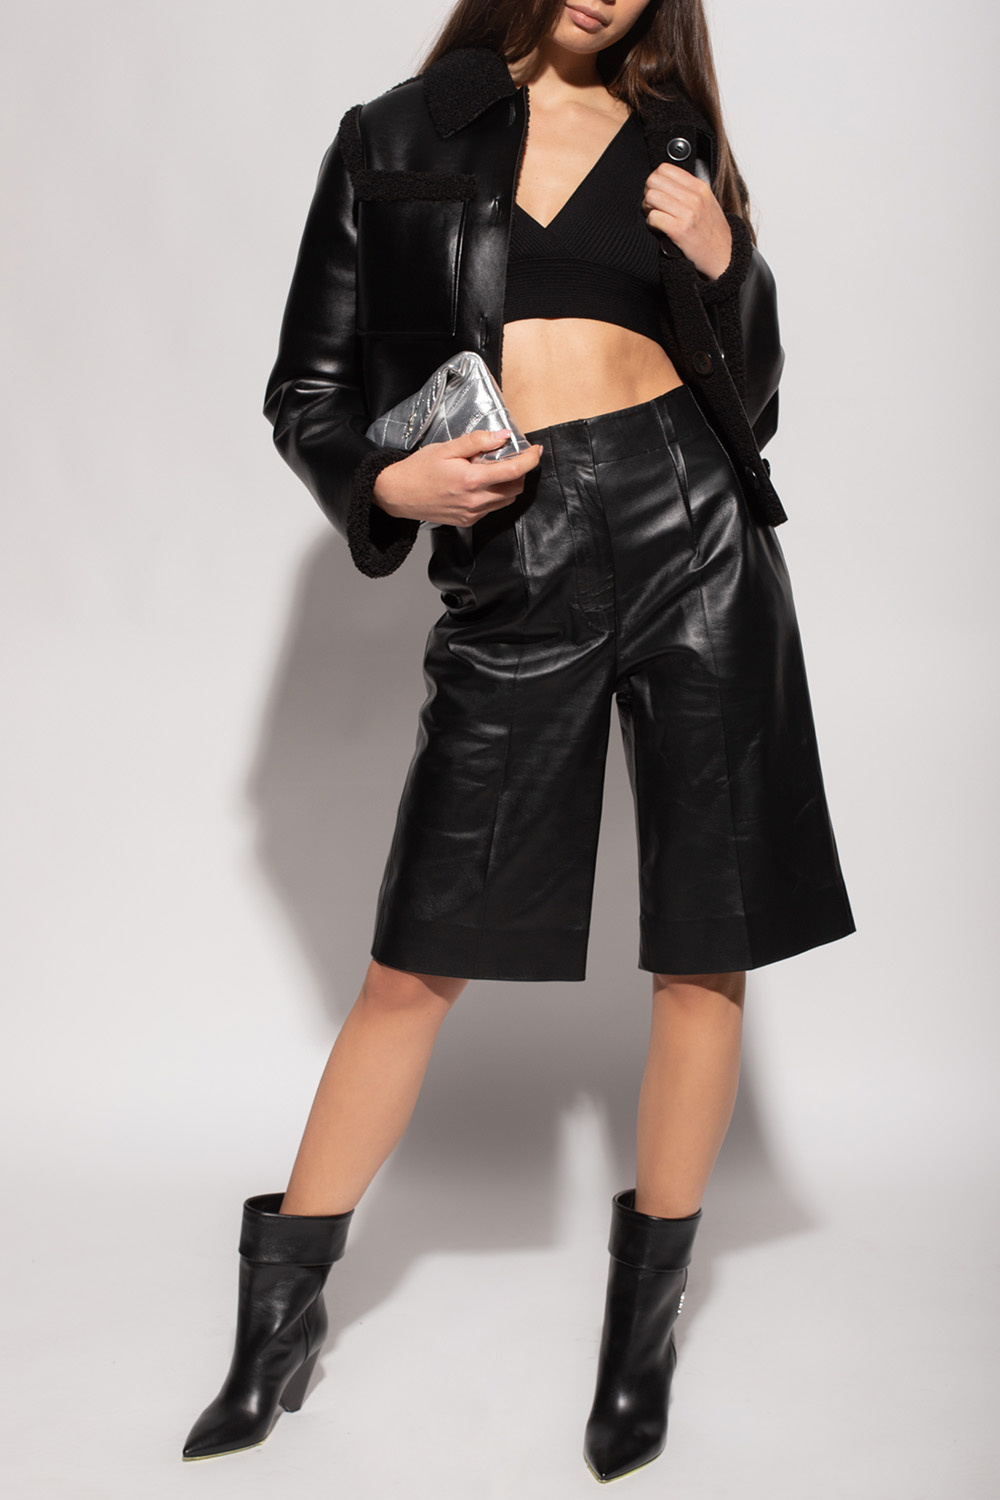 GenesinlifeShops Germany - Black Leather shorts Proenza Schouler ...